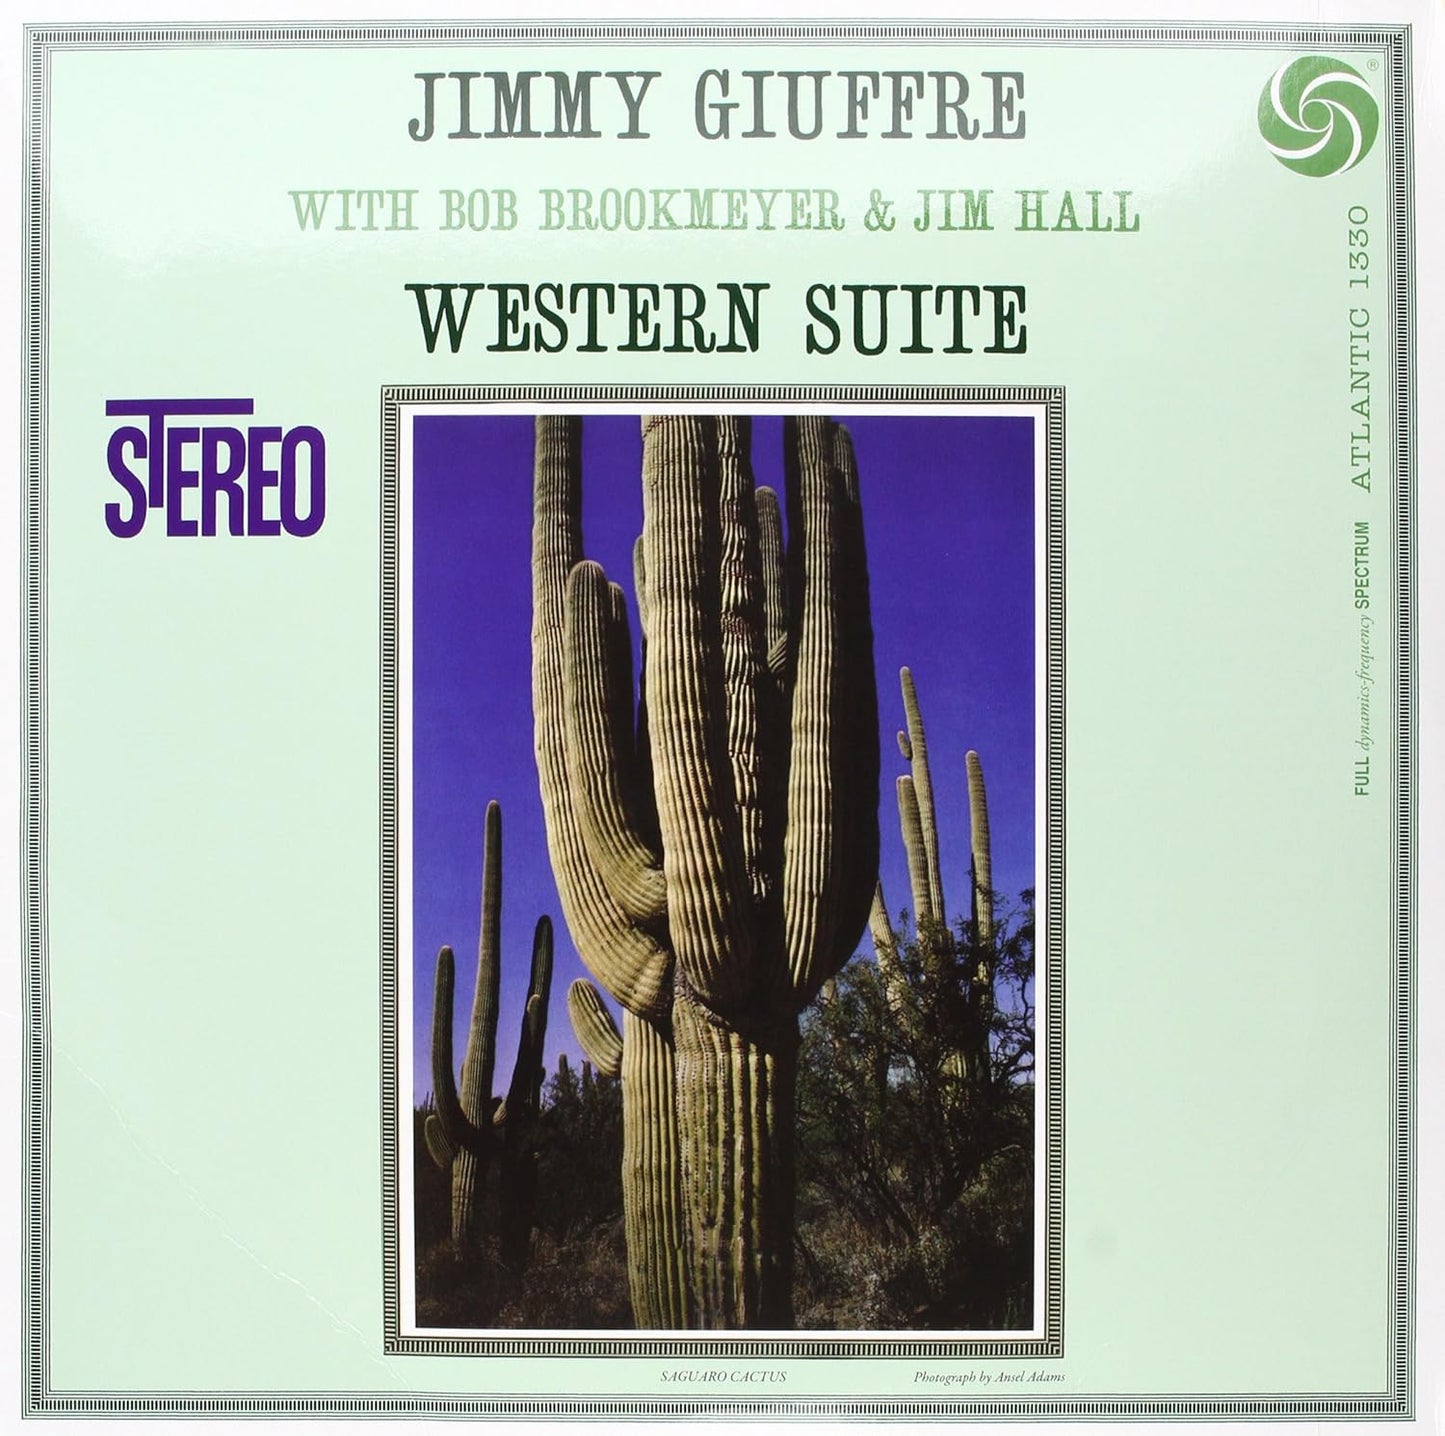 Jimmy Giuffrè - Western suite (Vinile 180gr.)